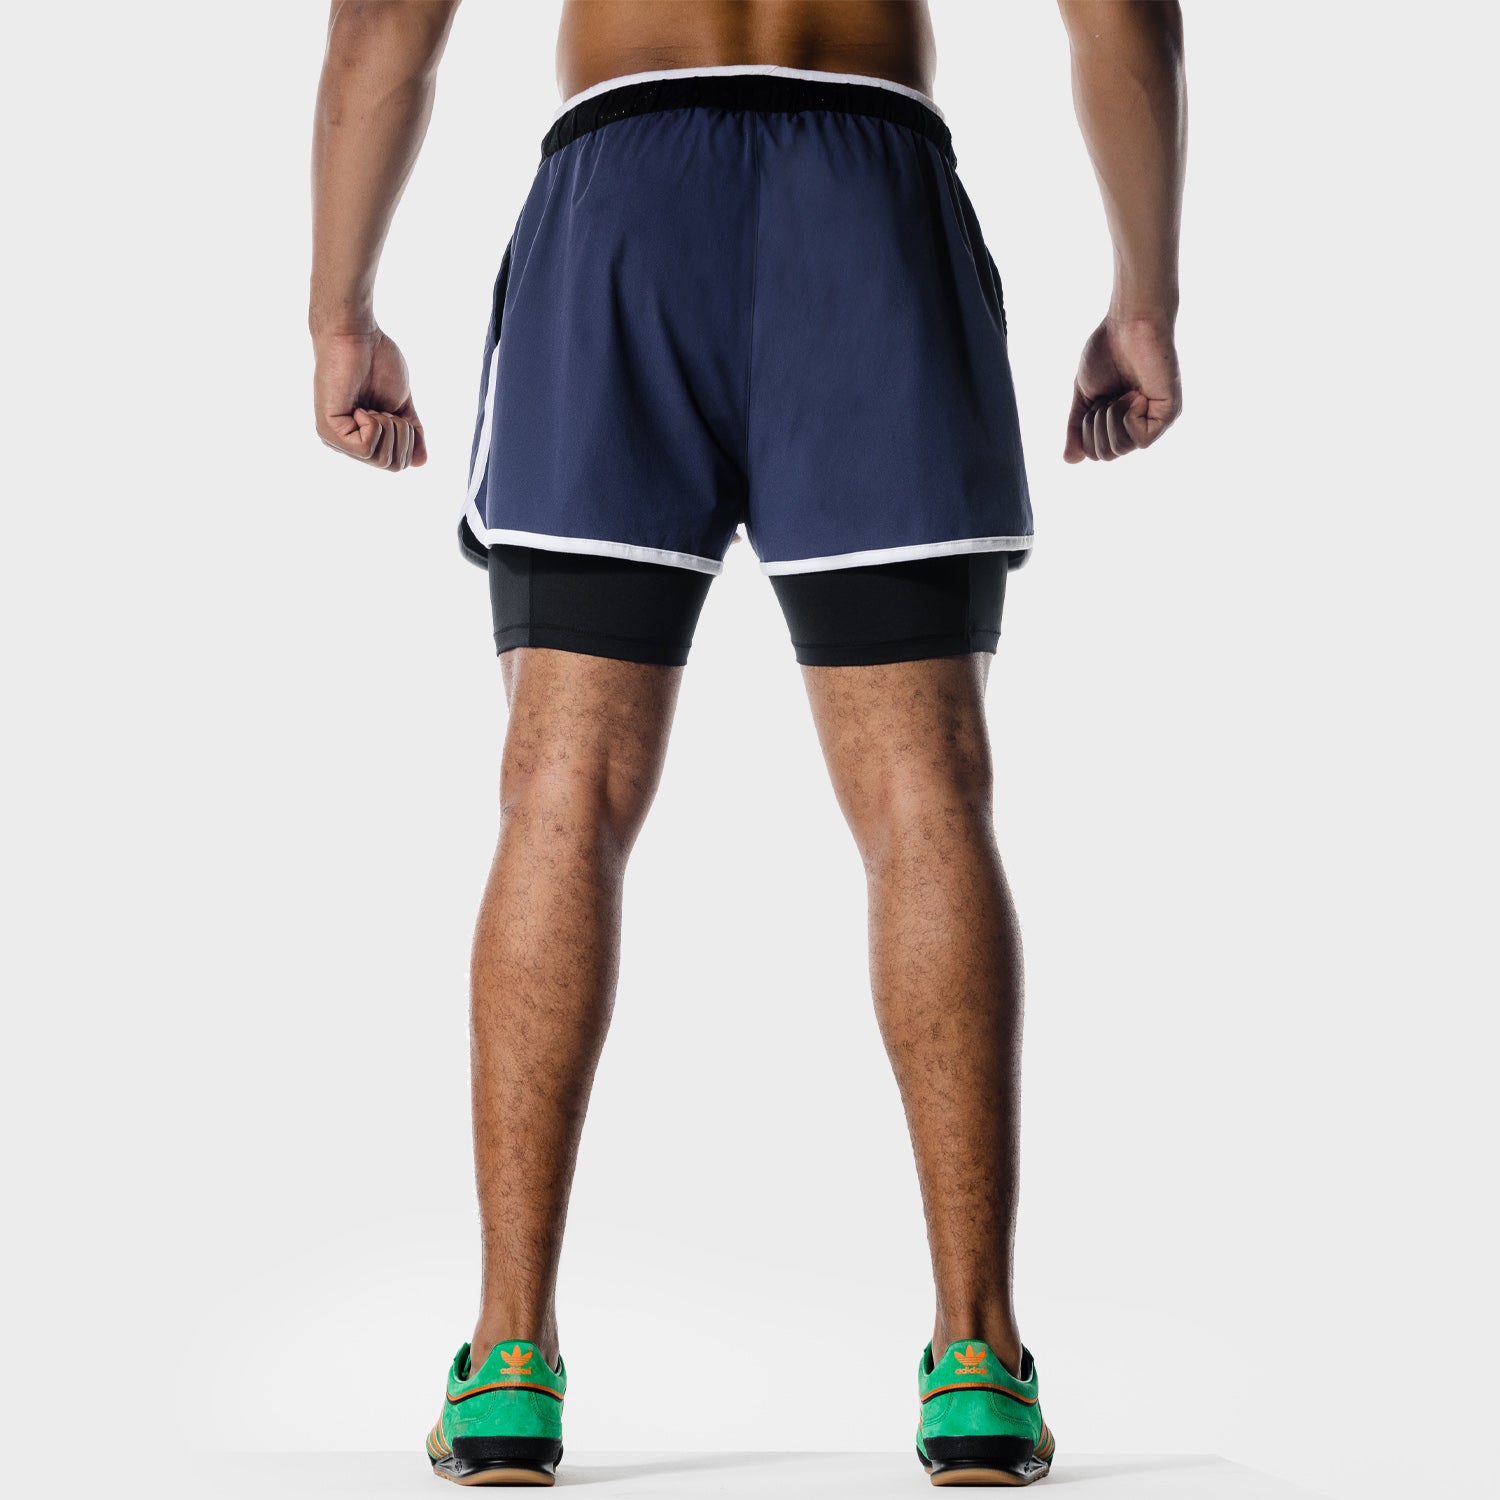 SQUATWOF-gym-wear-golden-era-2-in-1-shorts-blue-workout-shorts-for-men